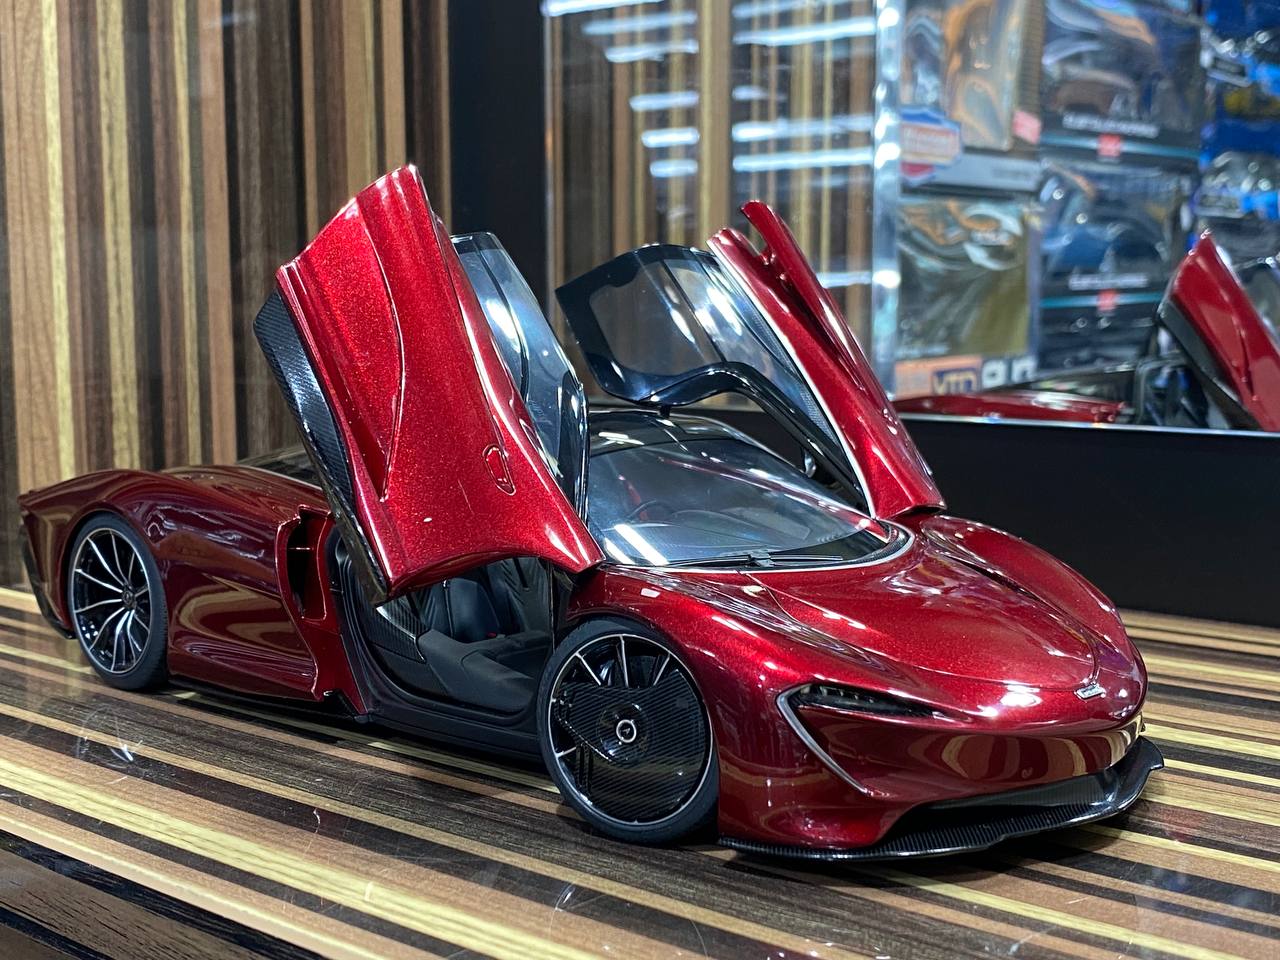 1/18 Diecast McLaren Speedtail Red AUTOart Scale Model Car|Sold in Dturman.com Dubai UAE.